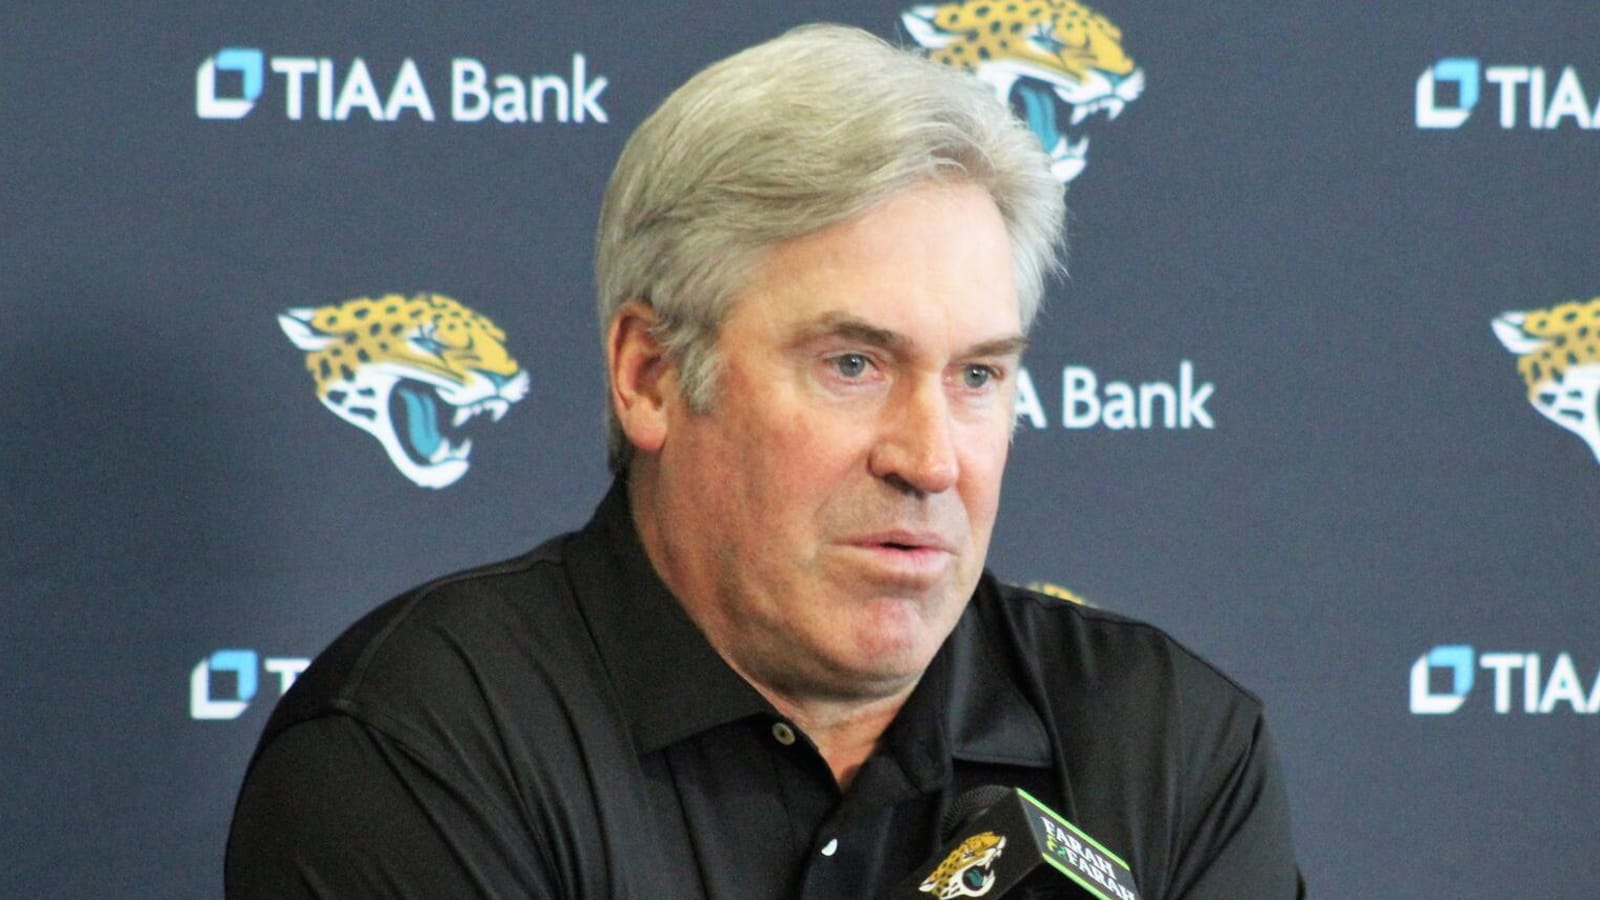 Jaguars HC believes adding Pro Bowler is unrealistic